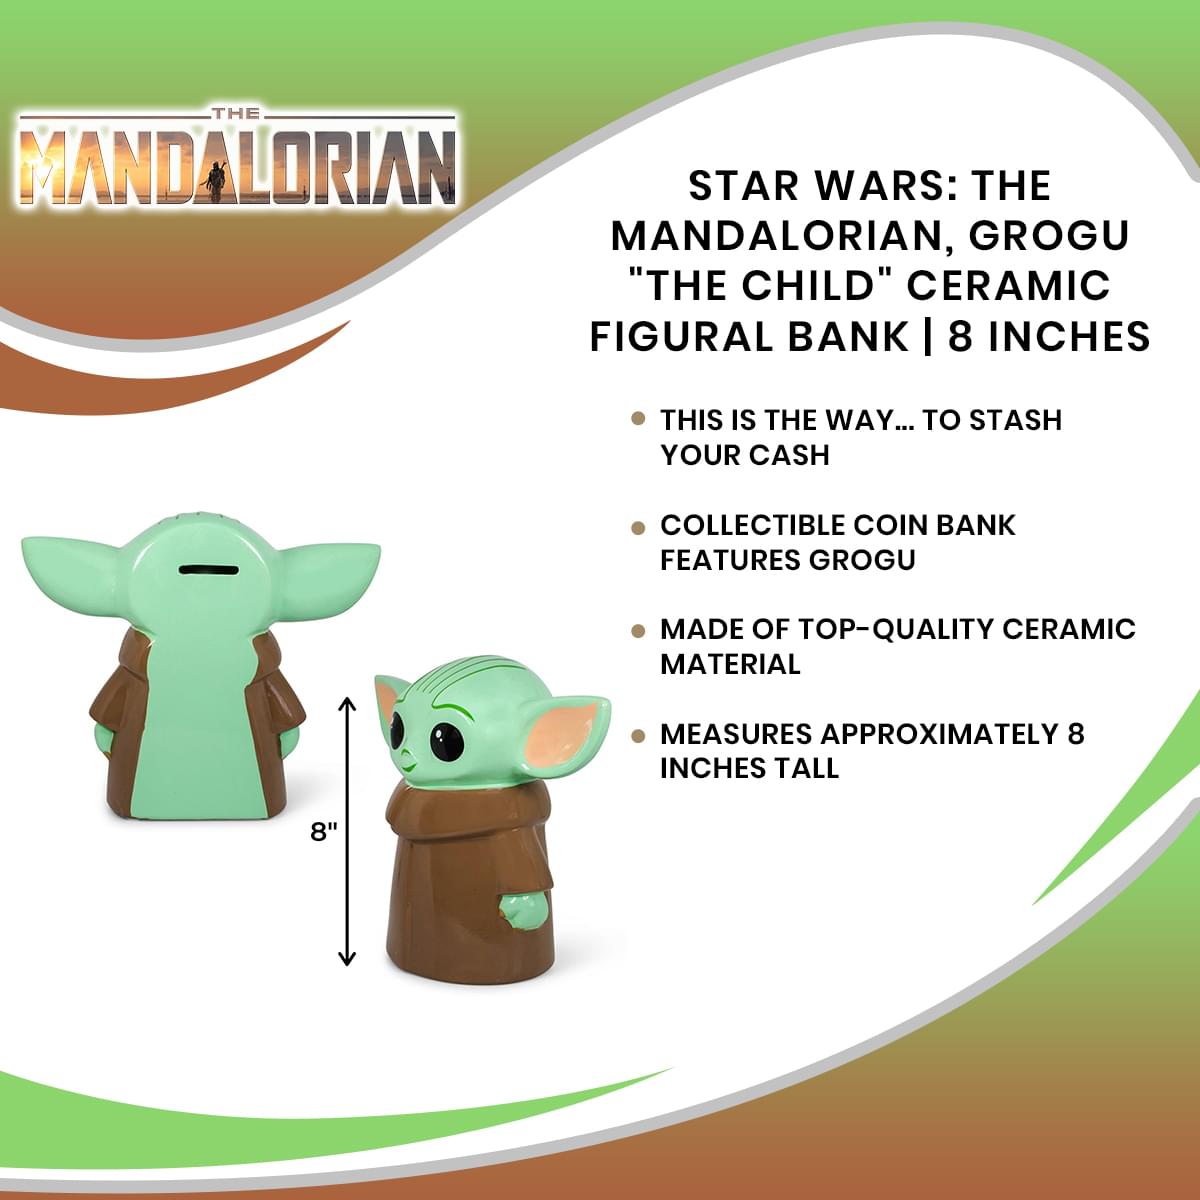 Star Wars: The Mandalorian, Grogu "The Child" Ceramic Figural Bank | 8 Inches